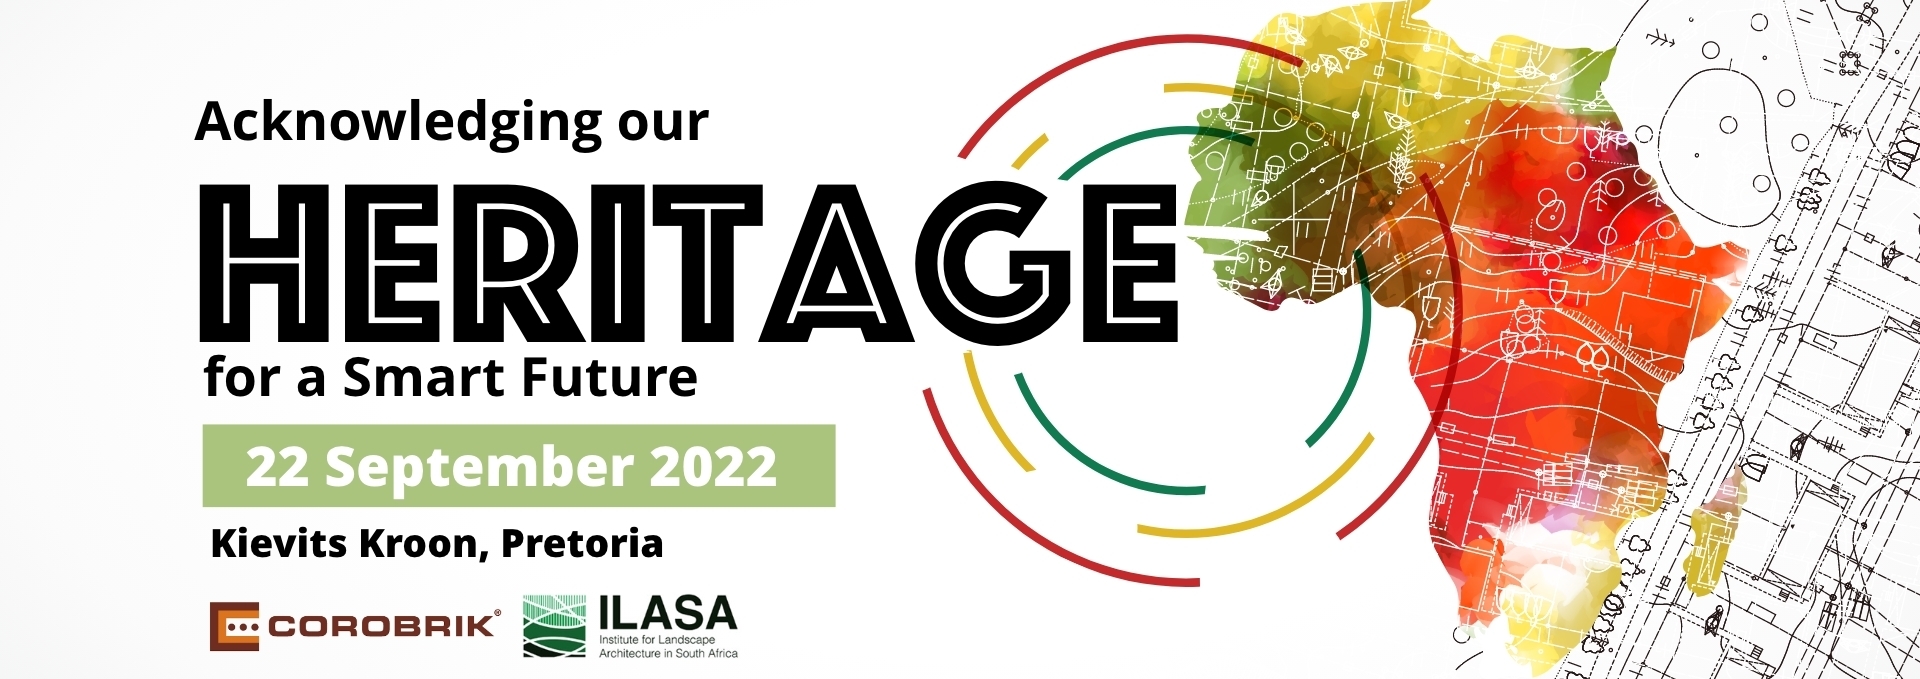 ILASA Heritage Banner Image